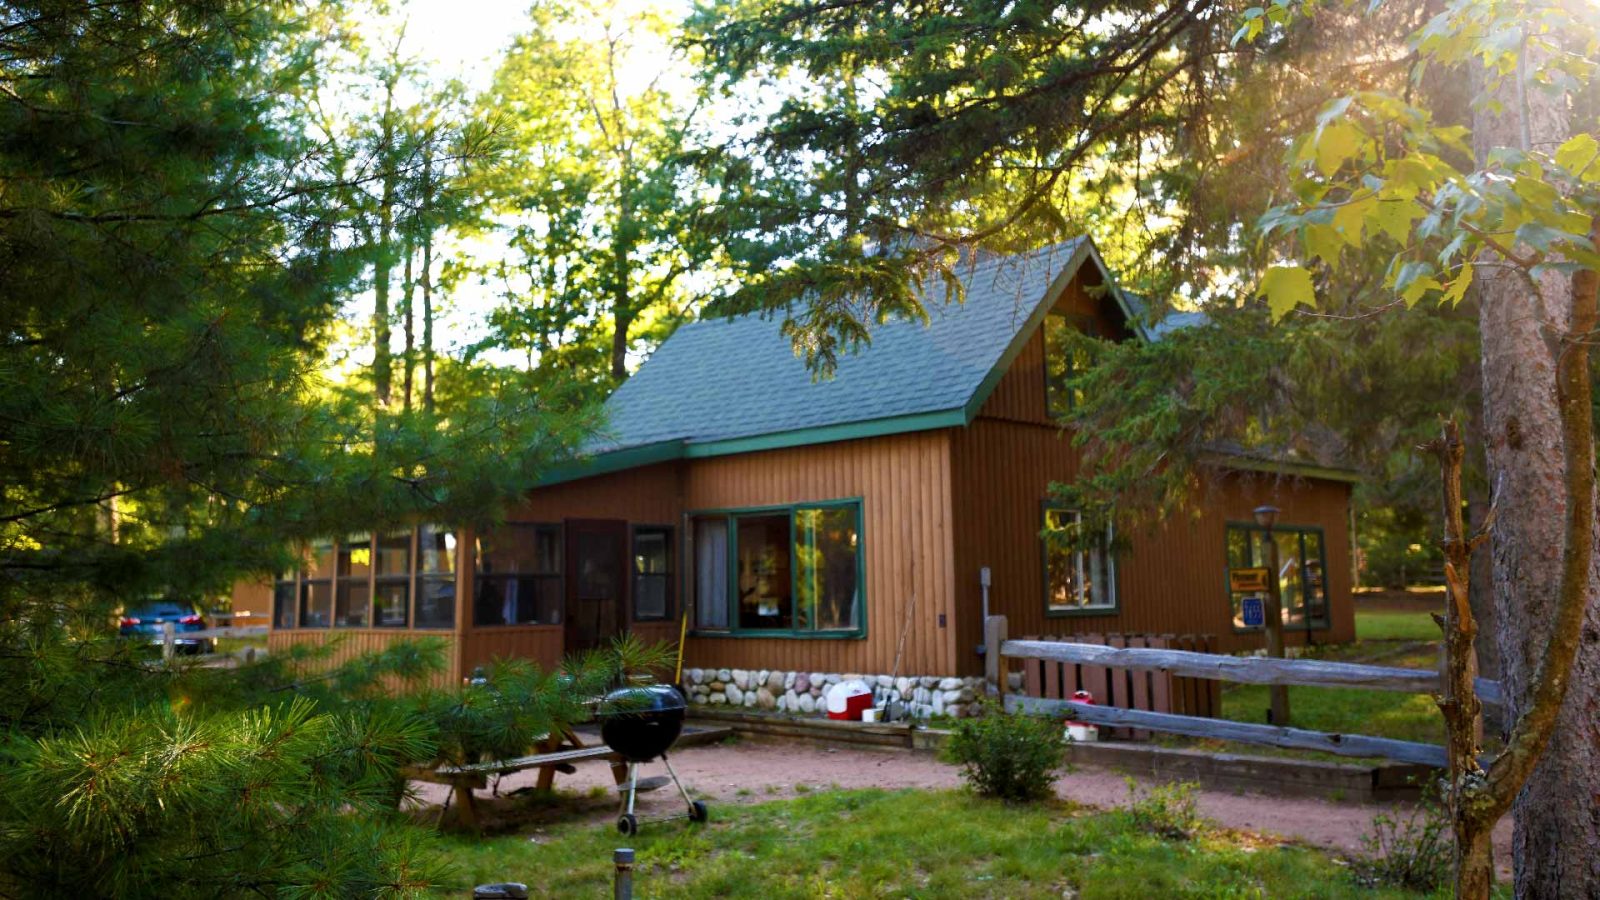 The Estrold Resort is family friendly lodging on Little St. Germain Lake.